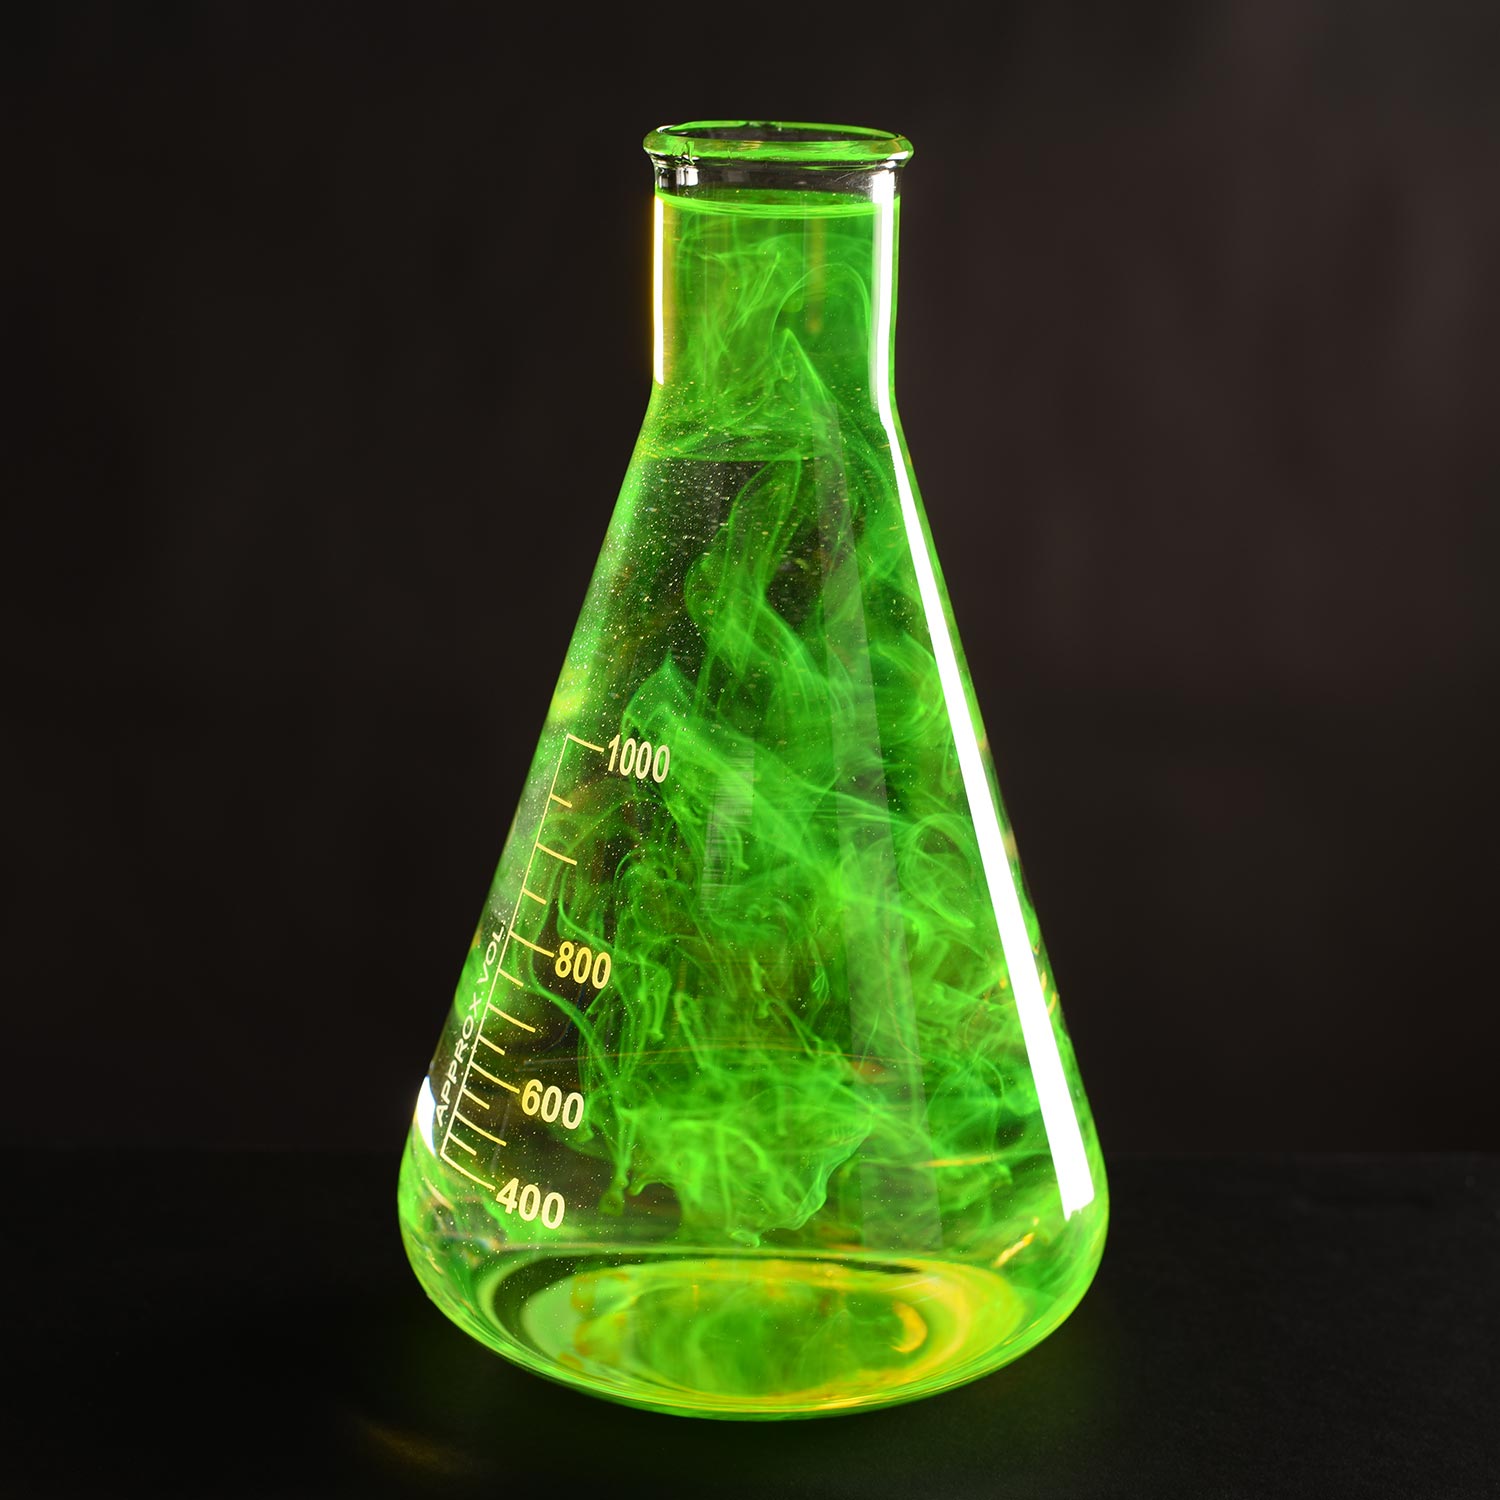 Atomic Glow Concentrate - Steve Spangler Science